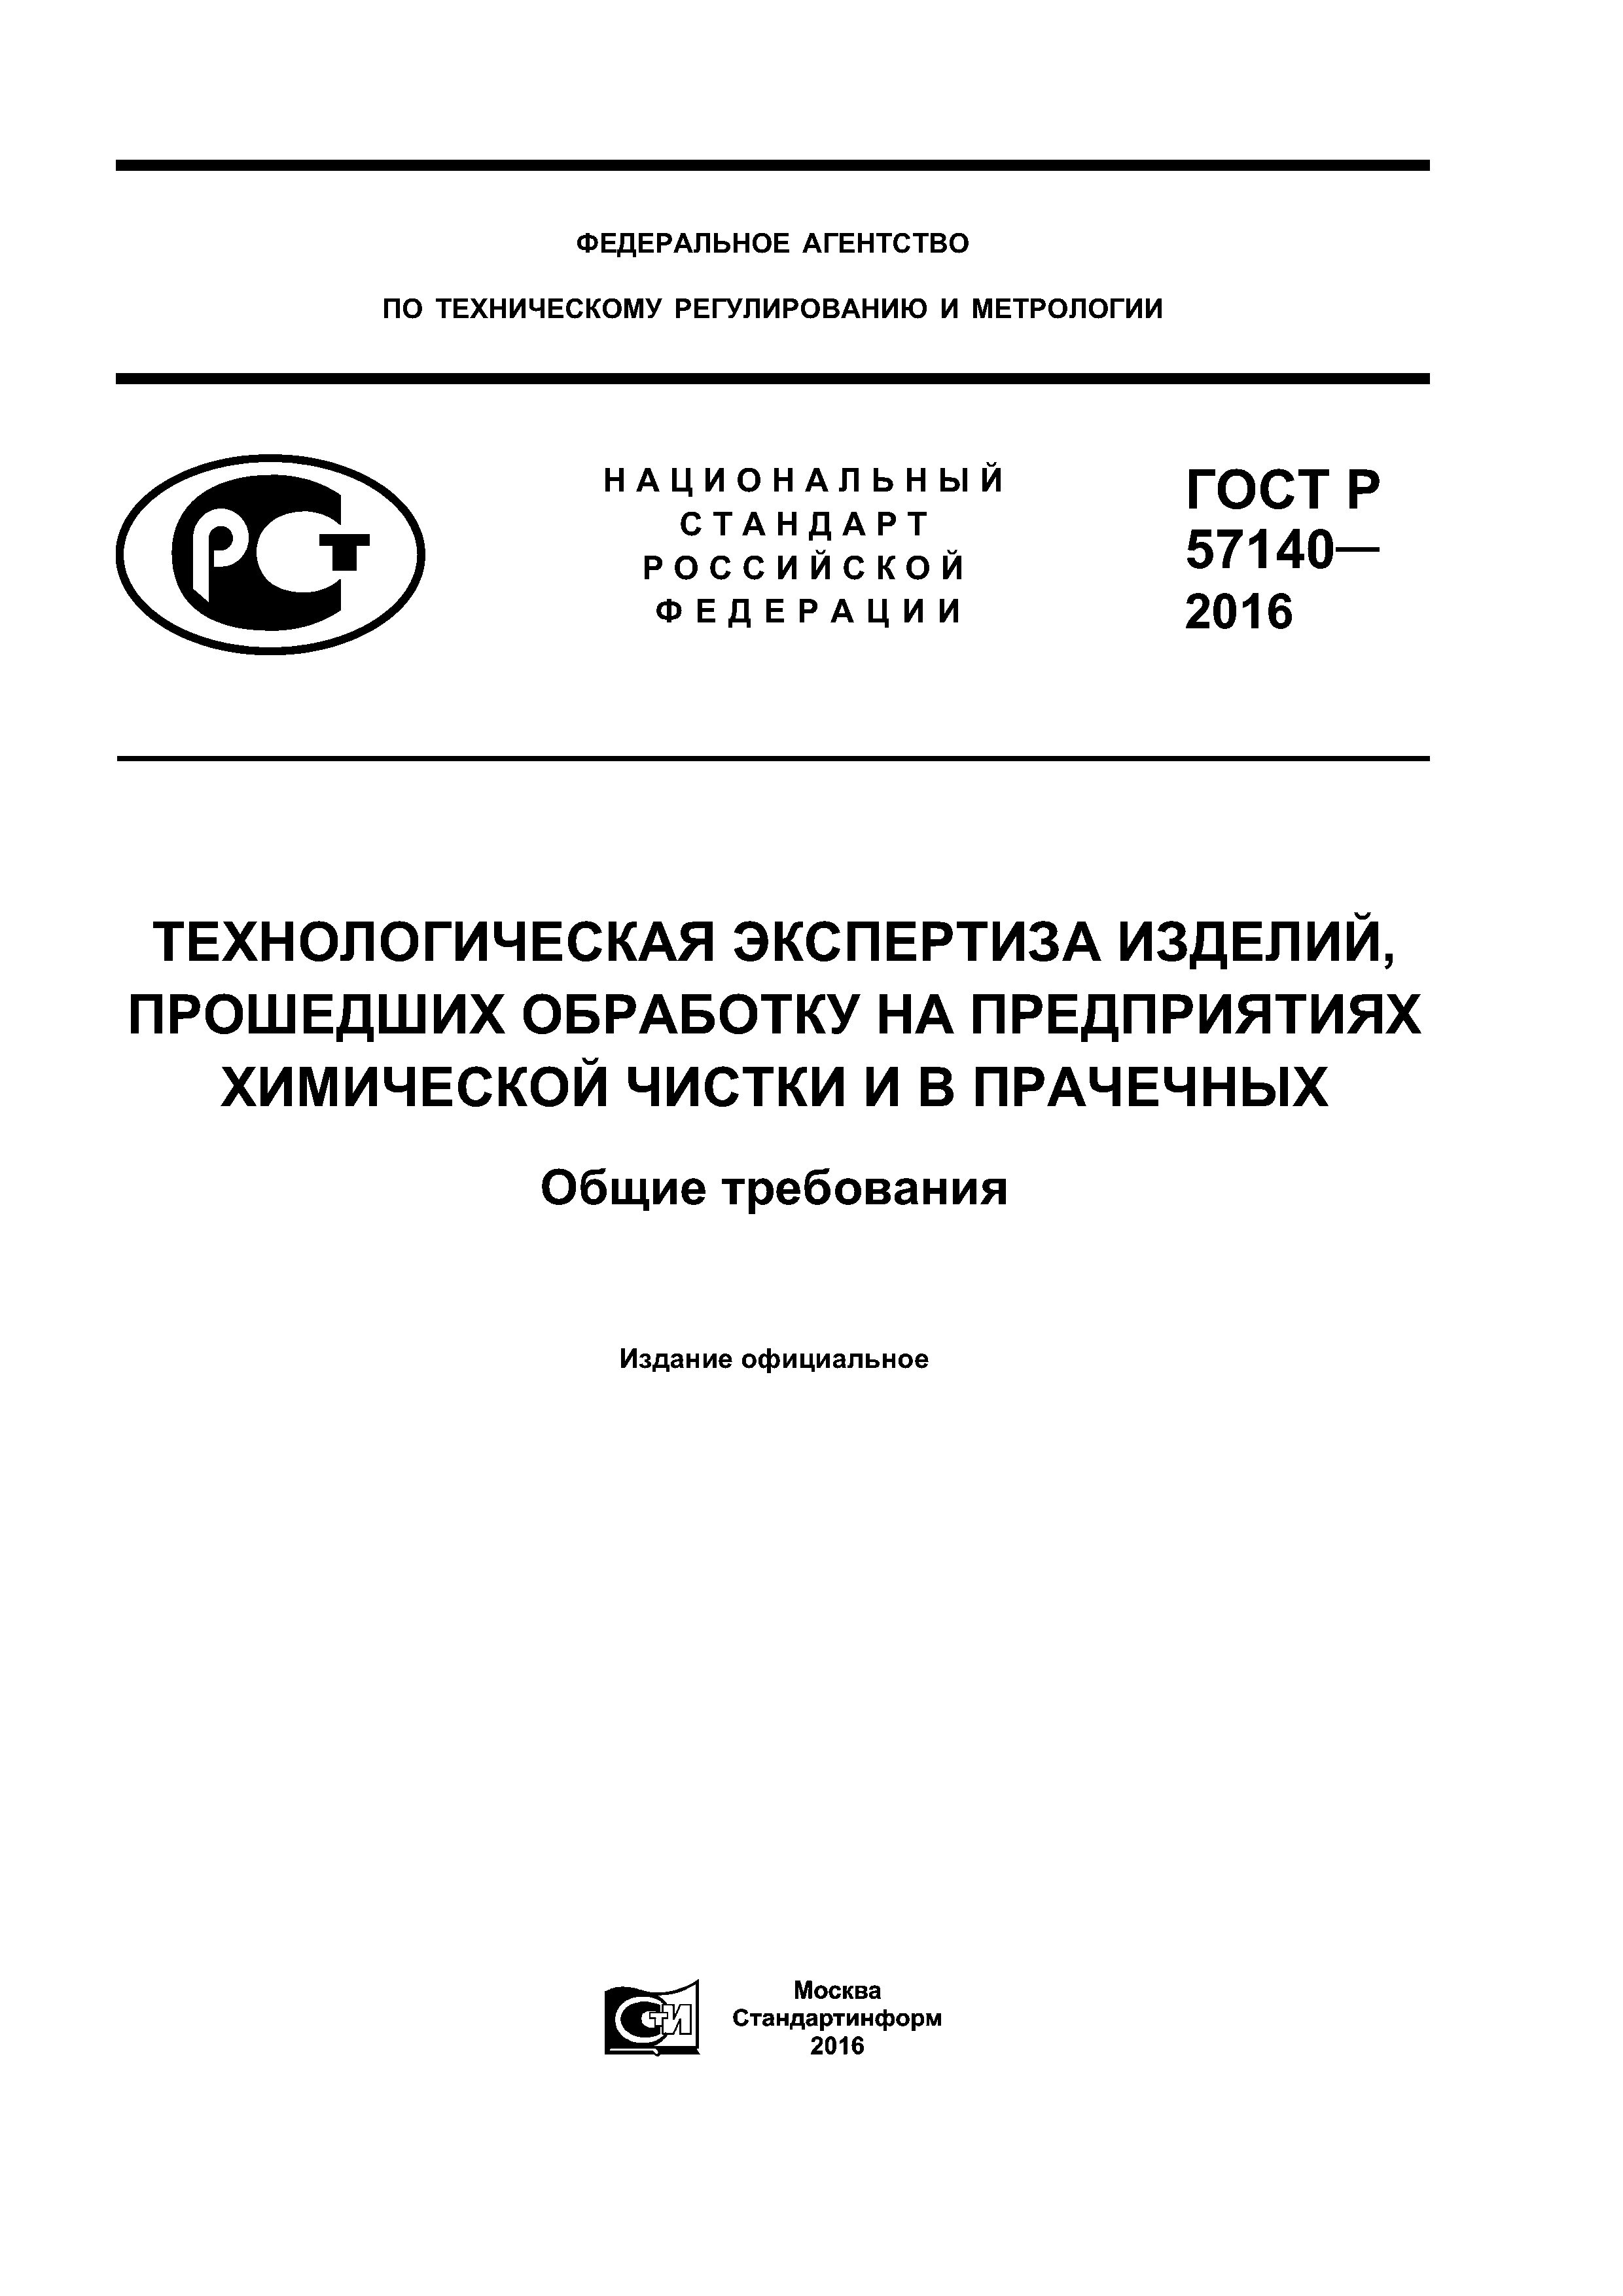 ГОСТ Р 57140-2016